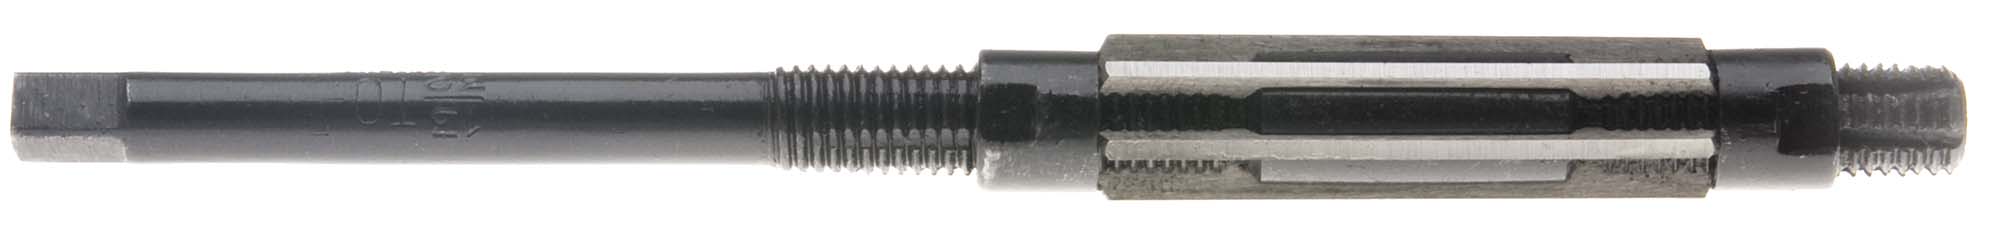 RMBL-7A High Speed Steel Adjustable Blade Reamer, 9/32"-5/16"